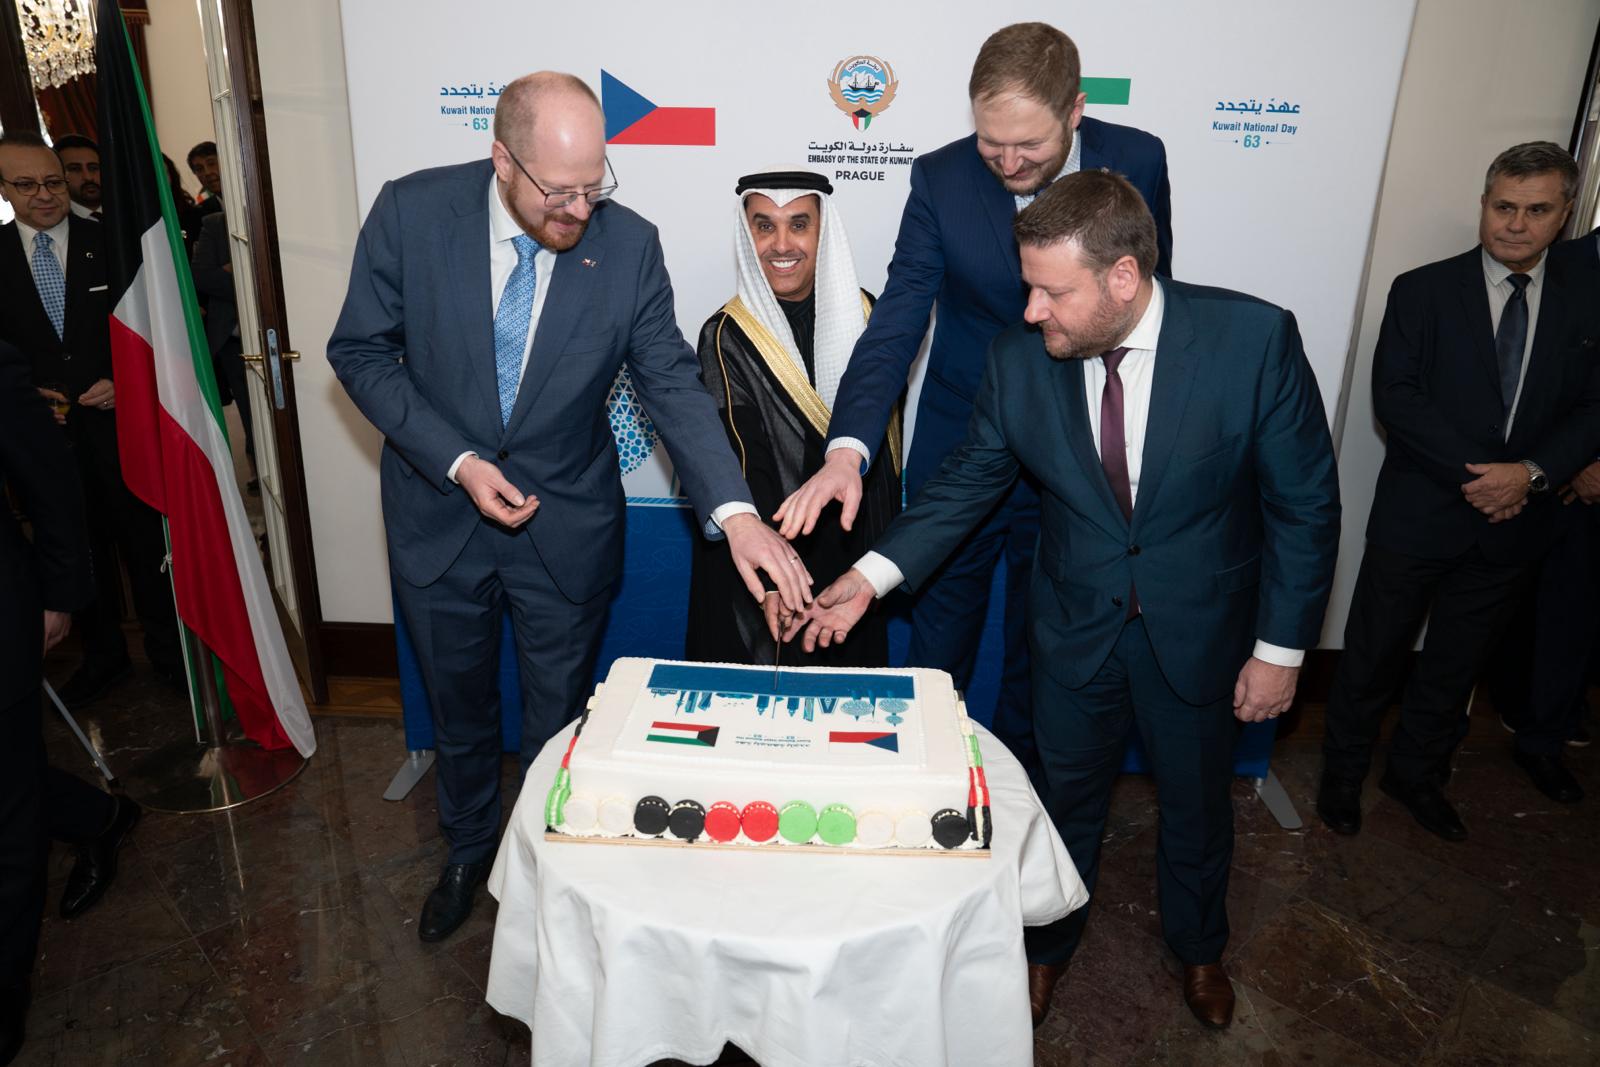 Kuwaiti embassy in Czech Republic celebrates Kuwait's 63rd National Day and 33rd Liberation Day